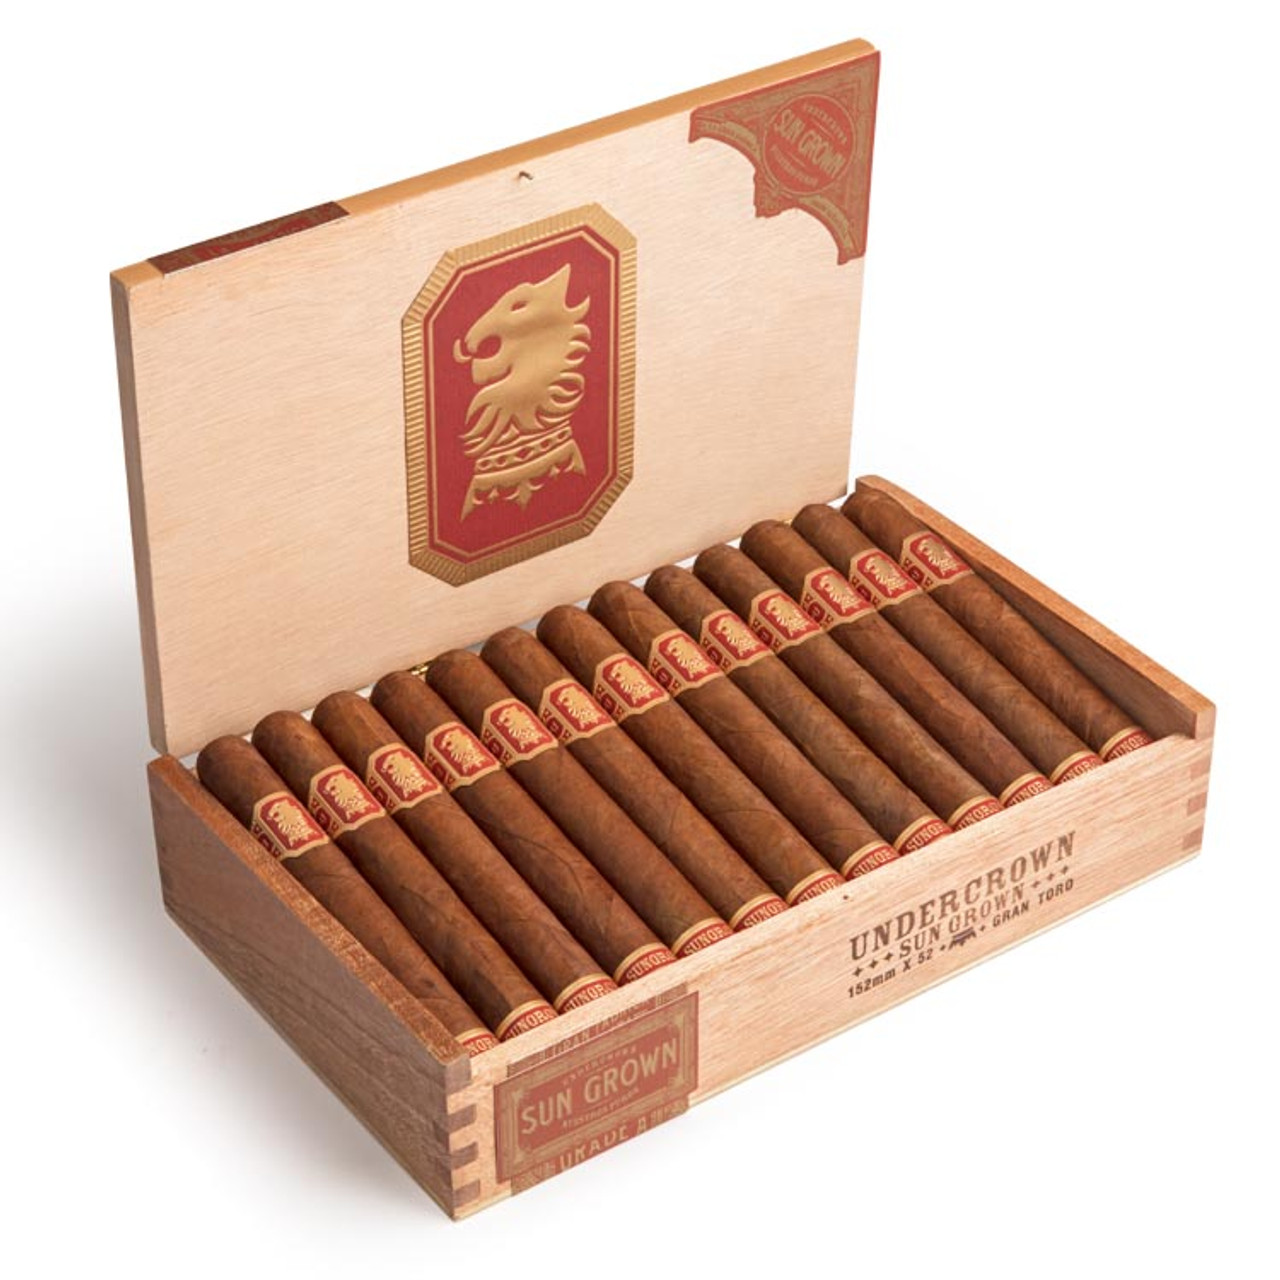 Undercrown Sungrown Double Corona Cigars - 7 x 54 (Box of 25)